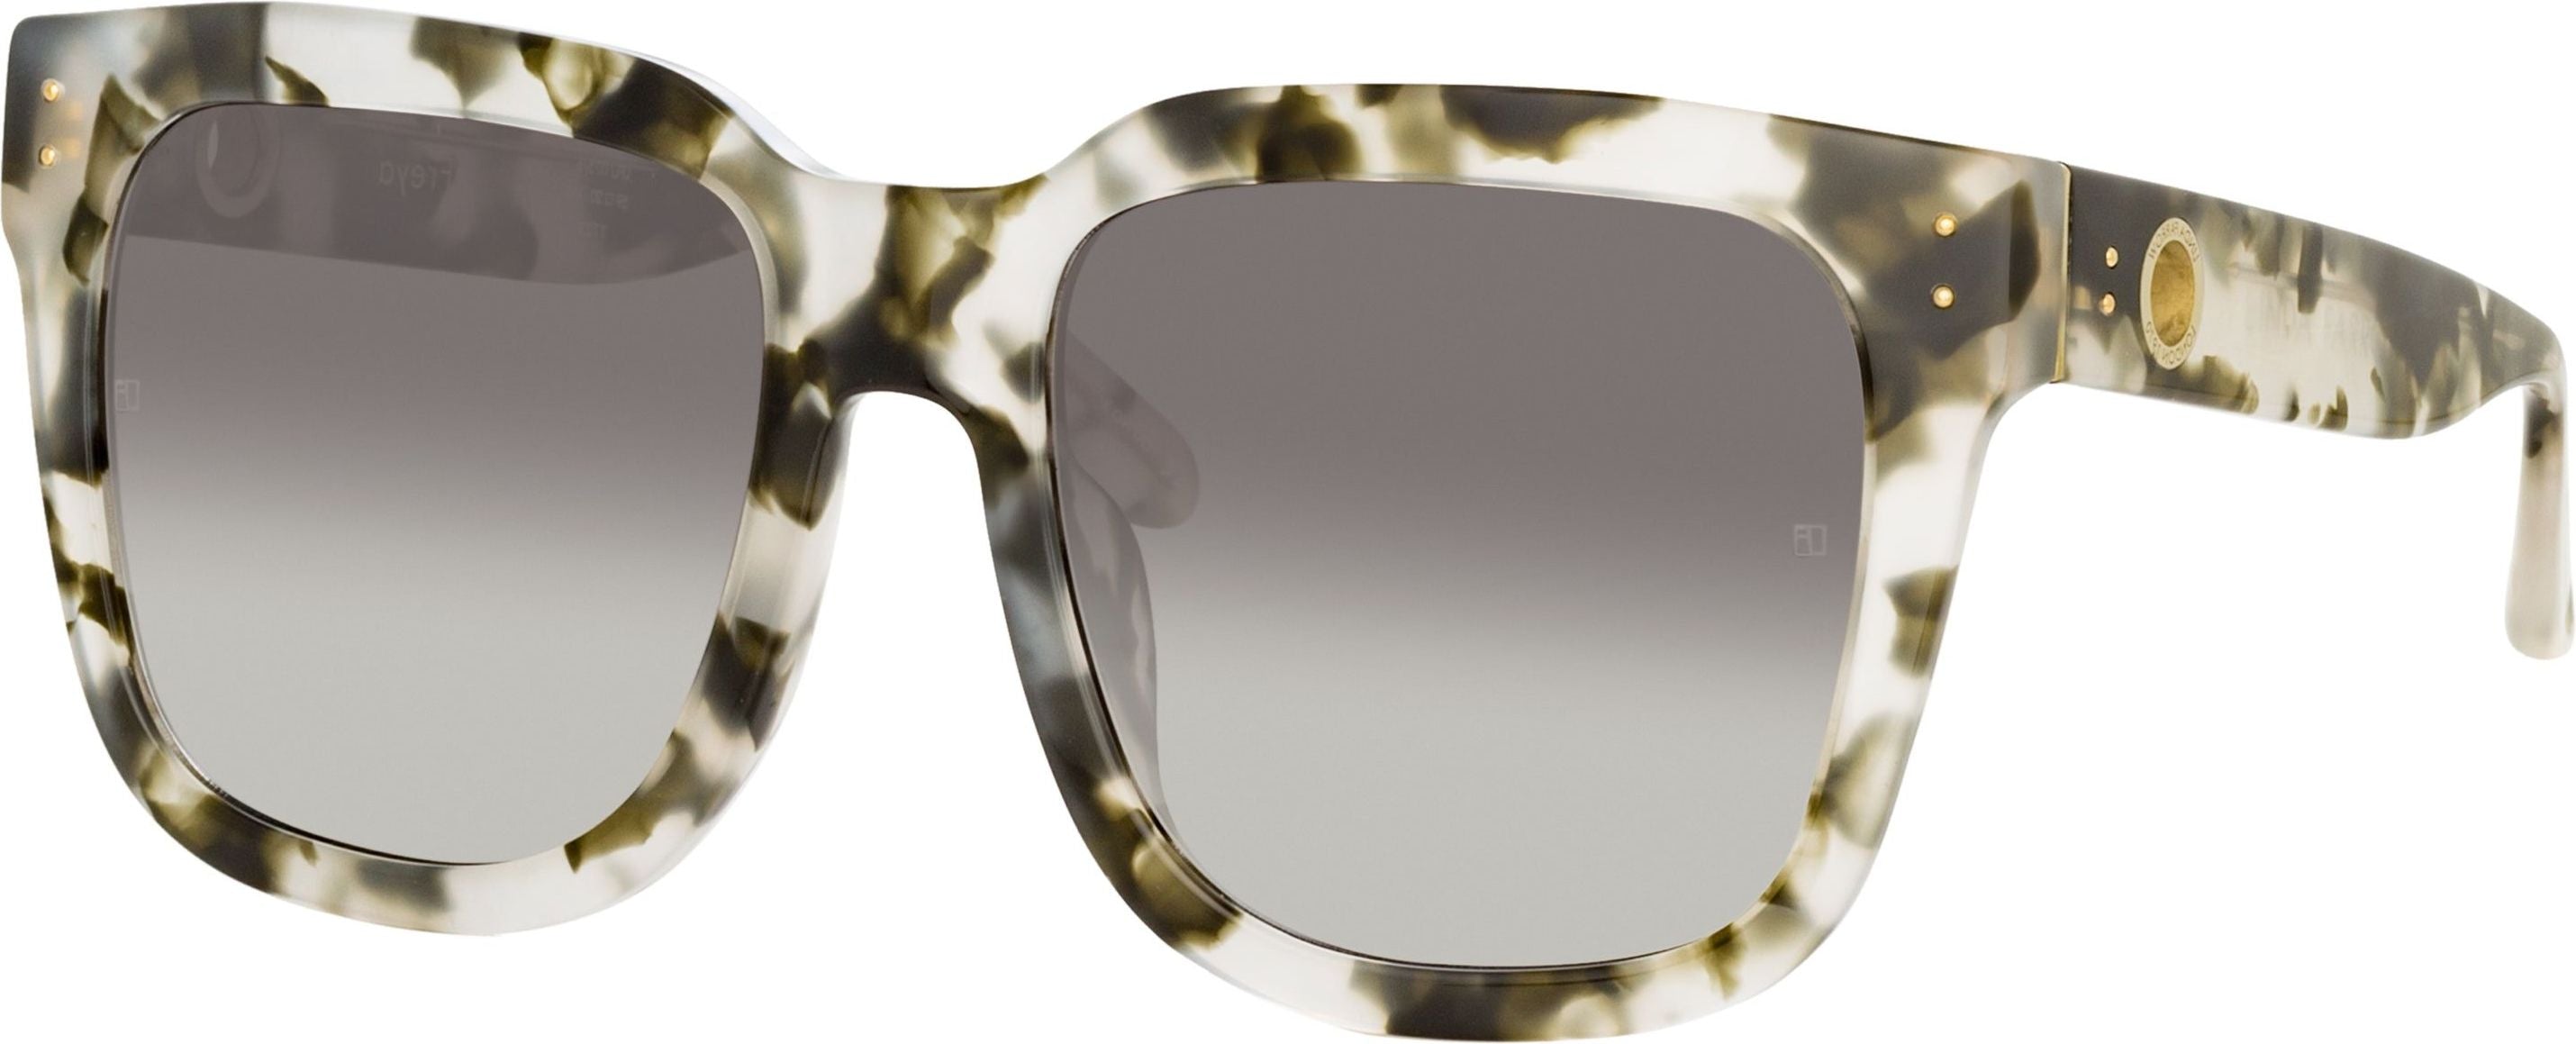 Color_LFL1175C6SUN - Freya D-Frame Sunglasses in Black and Grey Tortoiseshell